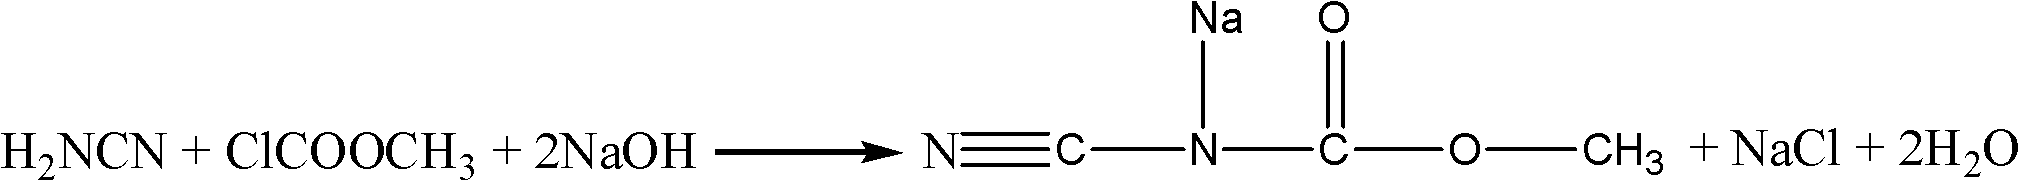 Method for preparing 5-methylbenzimidazole-2-methyl carbamate